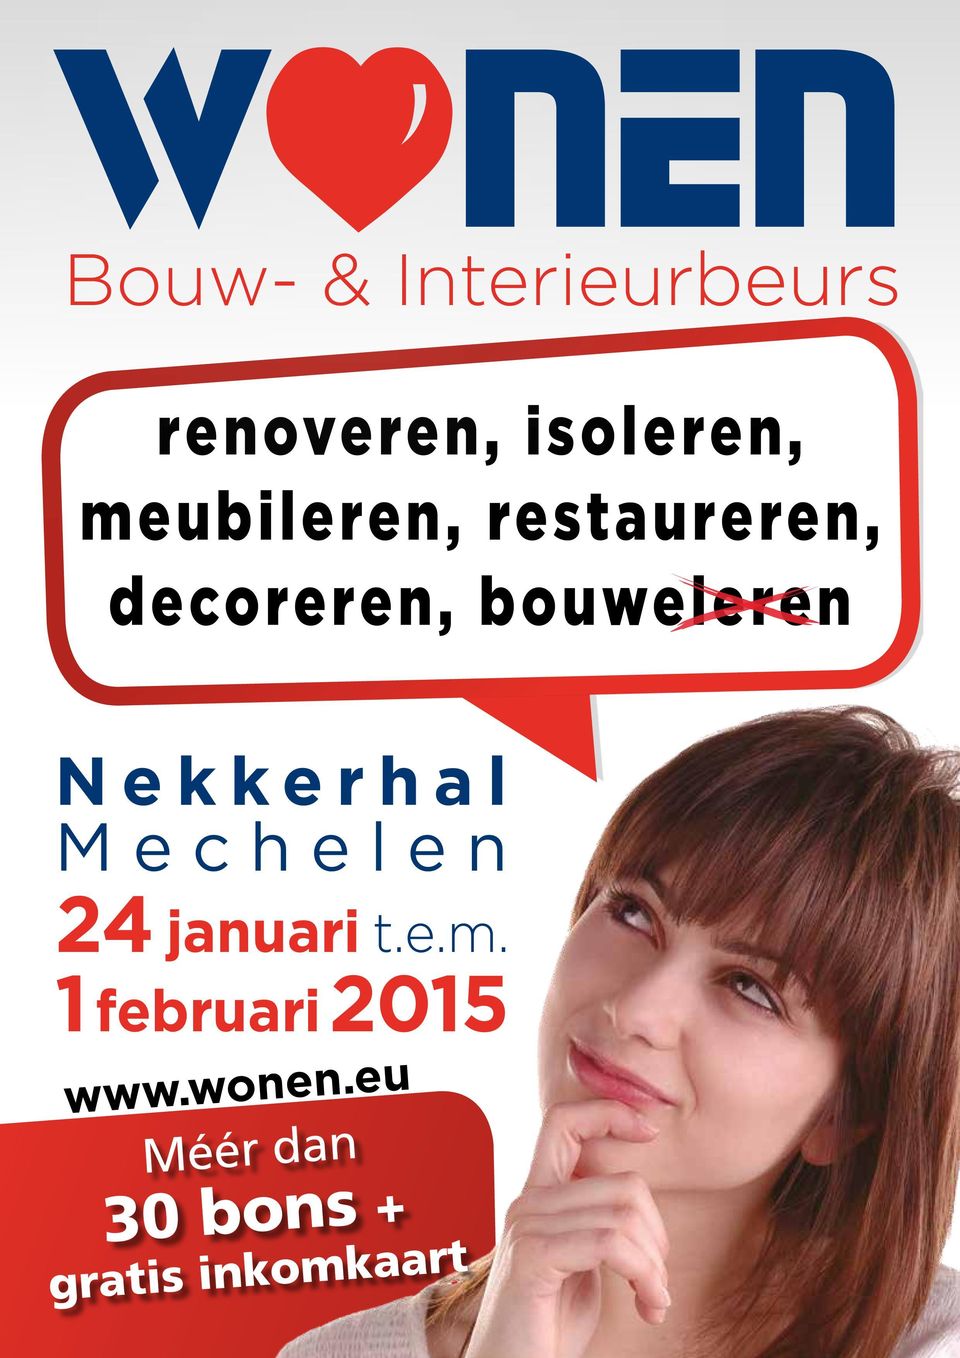 Nekkerhal Mechelen 24 januari t.e.m.